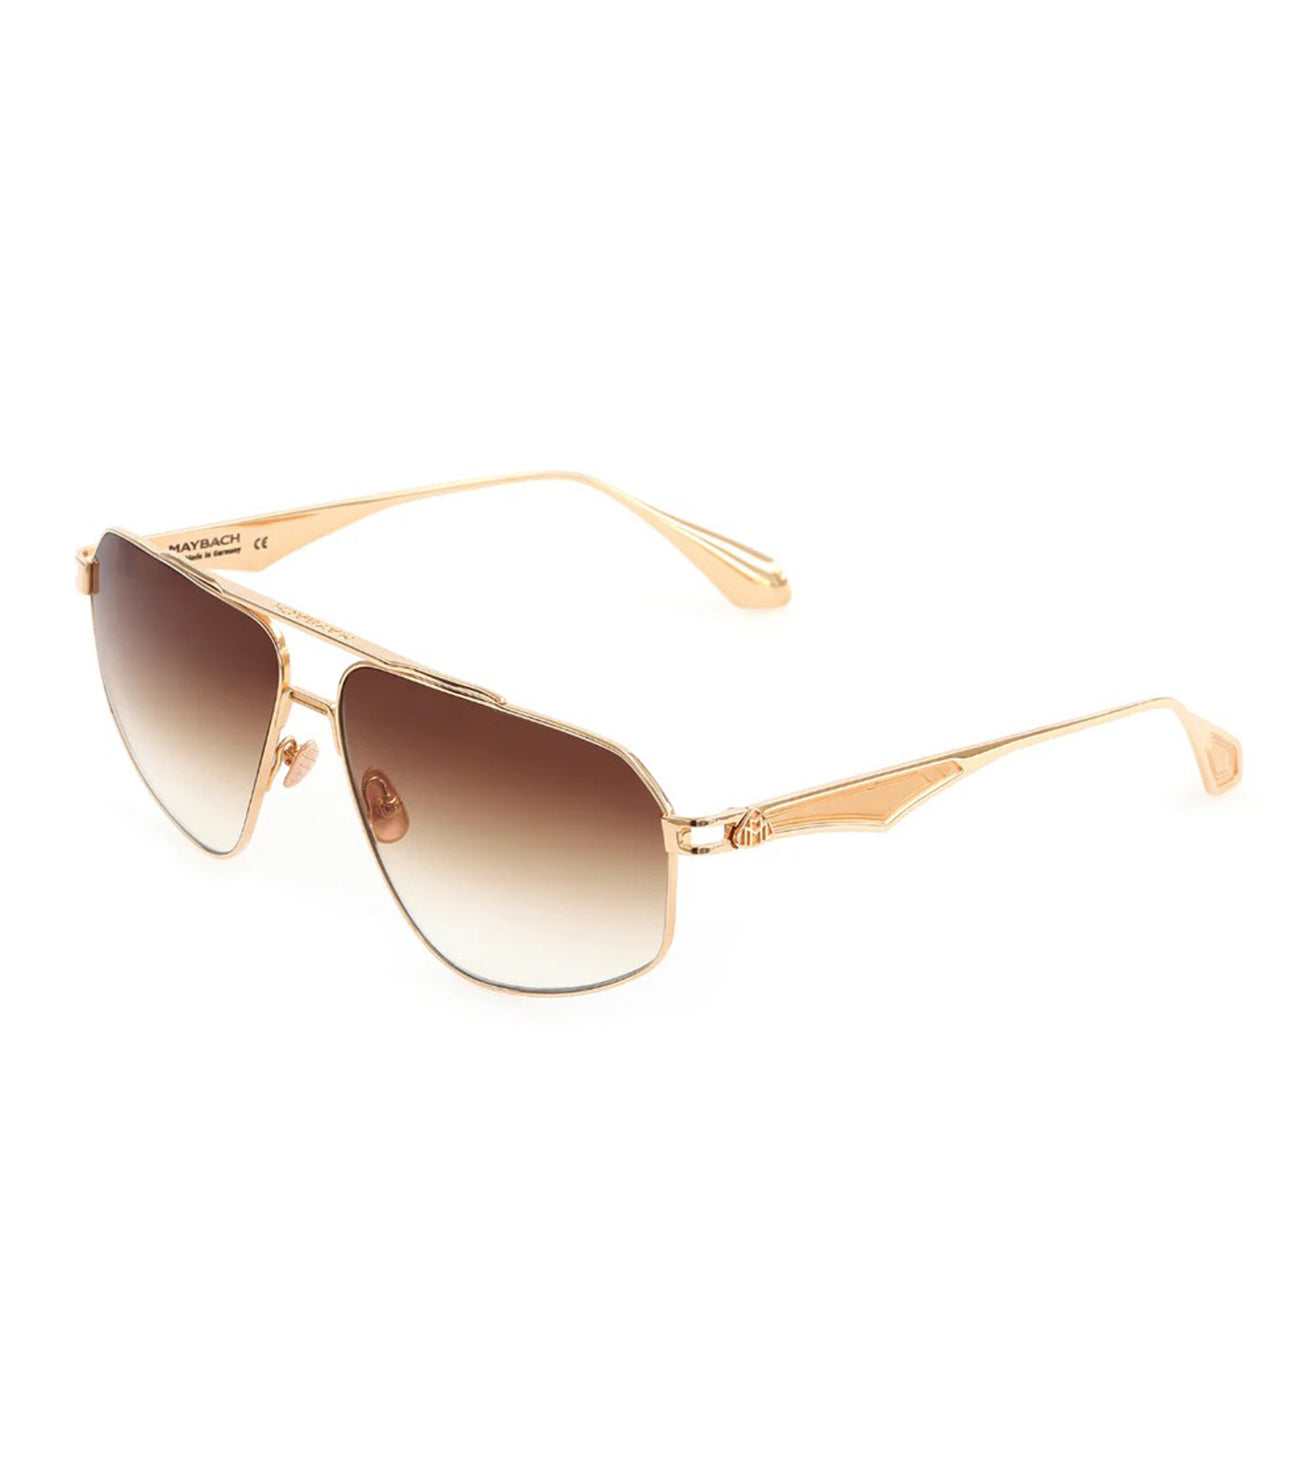 Maybach Men's Bronze Aviator Sunglasses